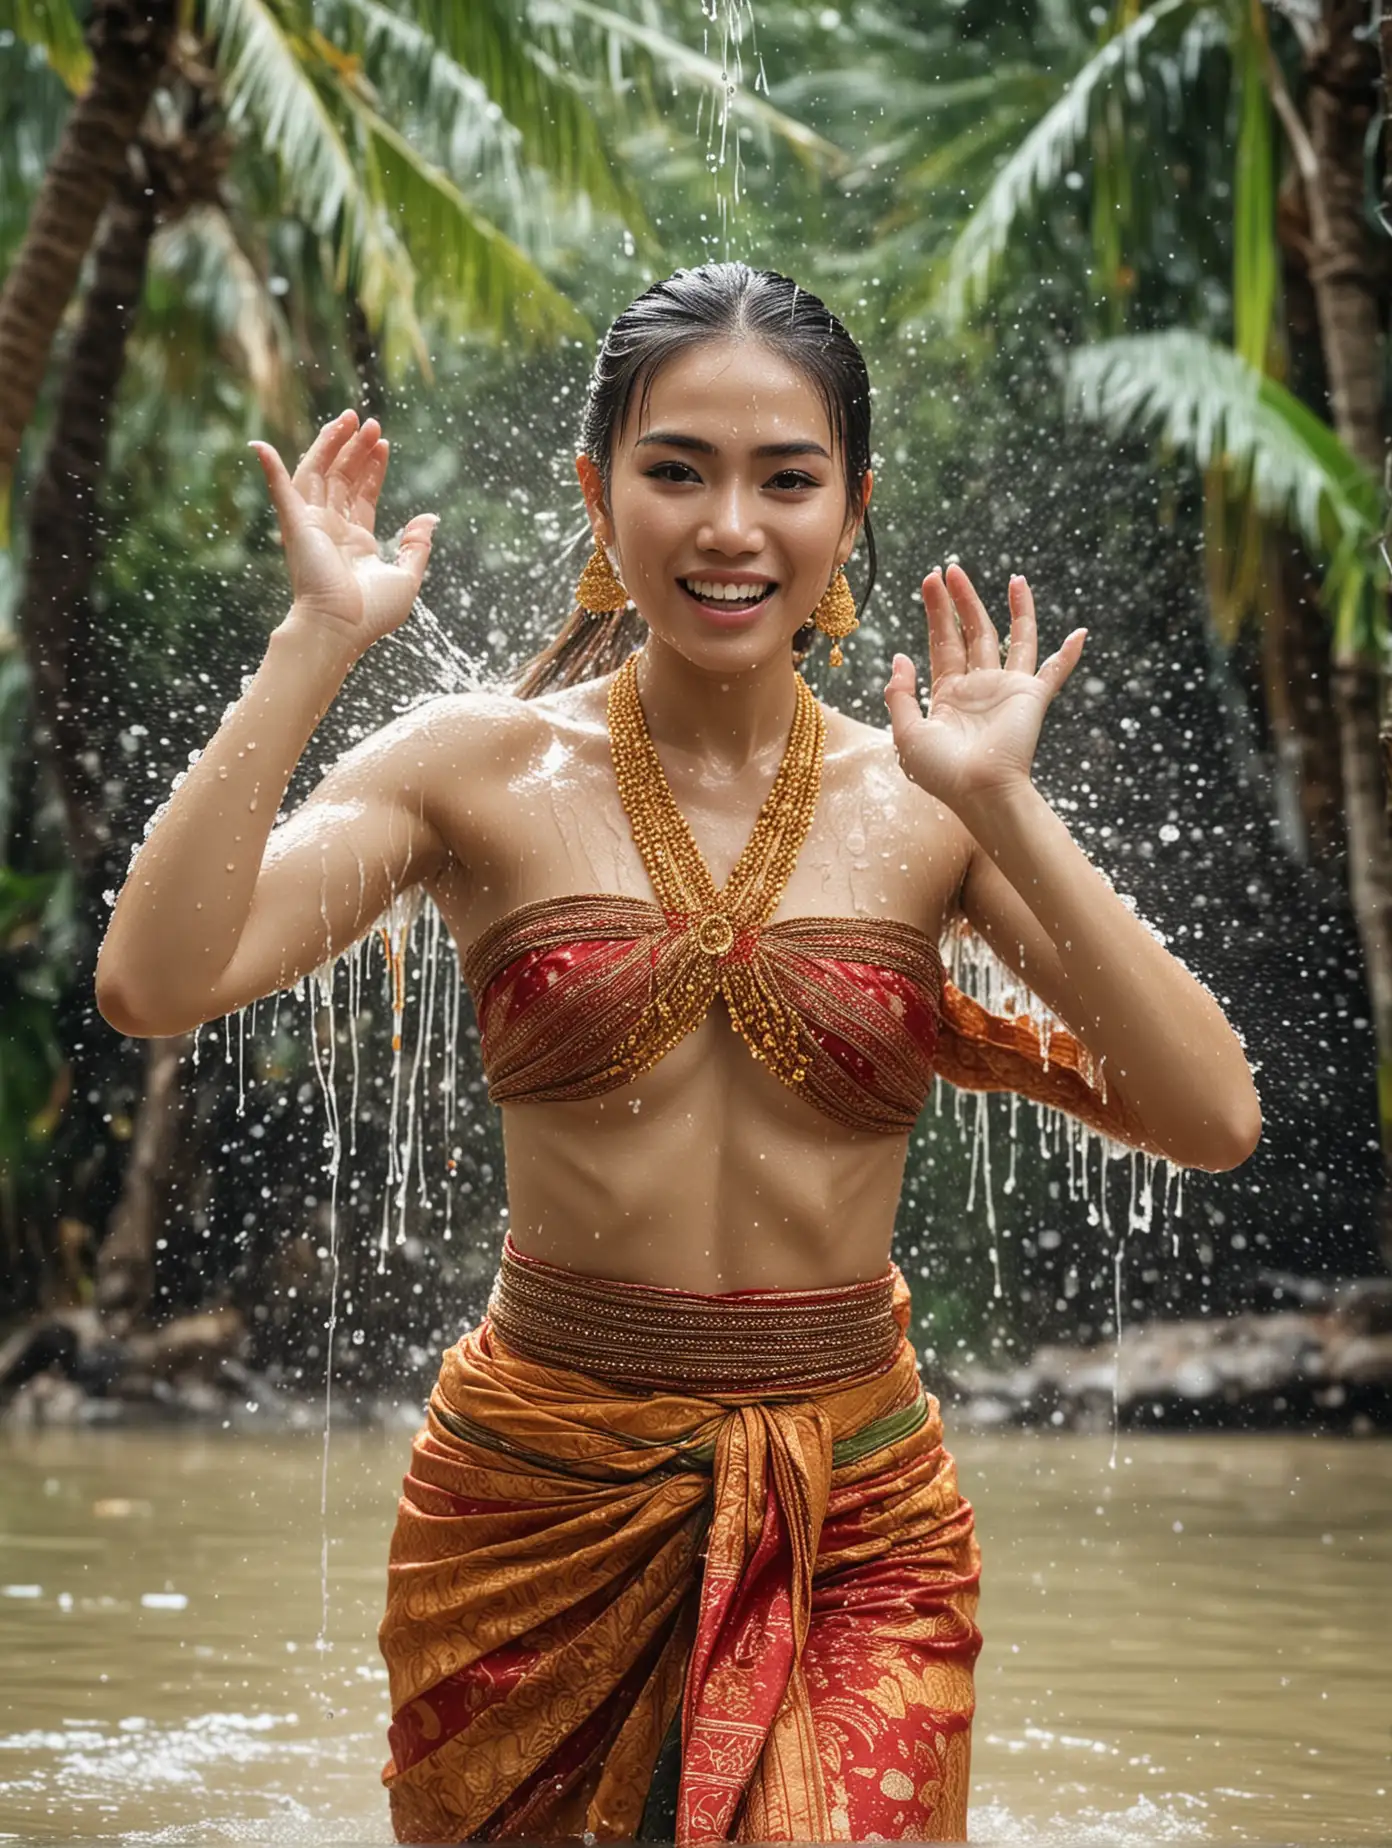 Thai New Year Celebration Festive Water Splashing Tradition